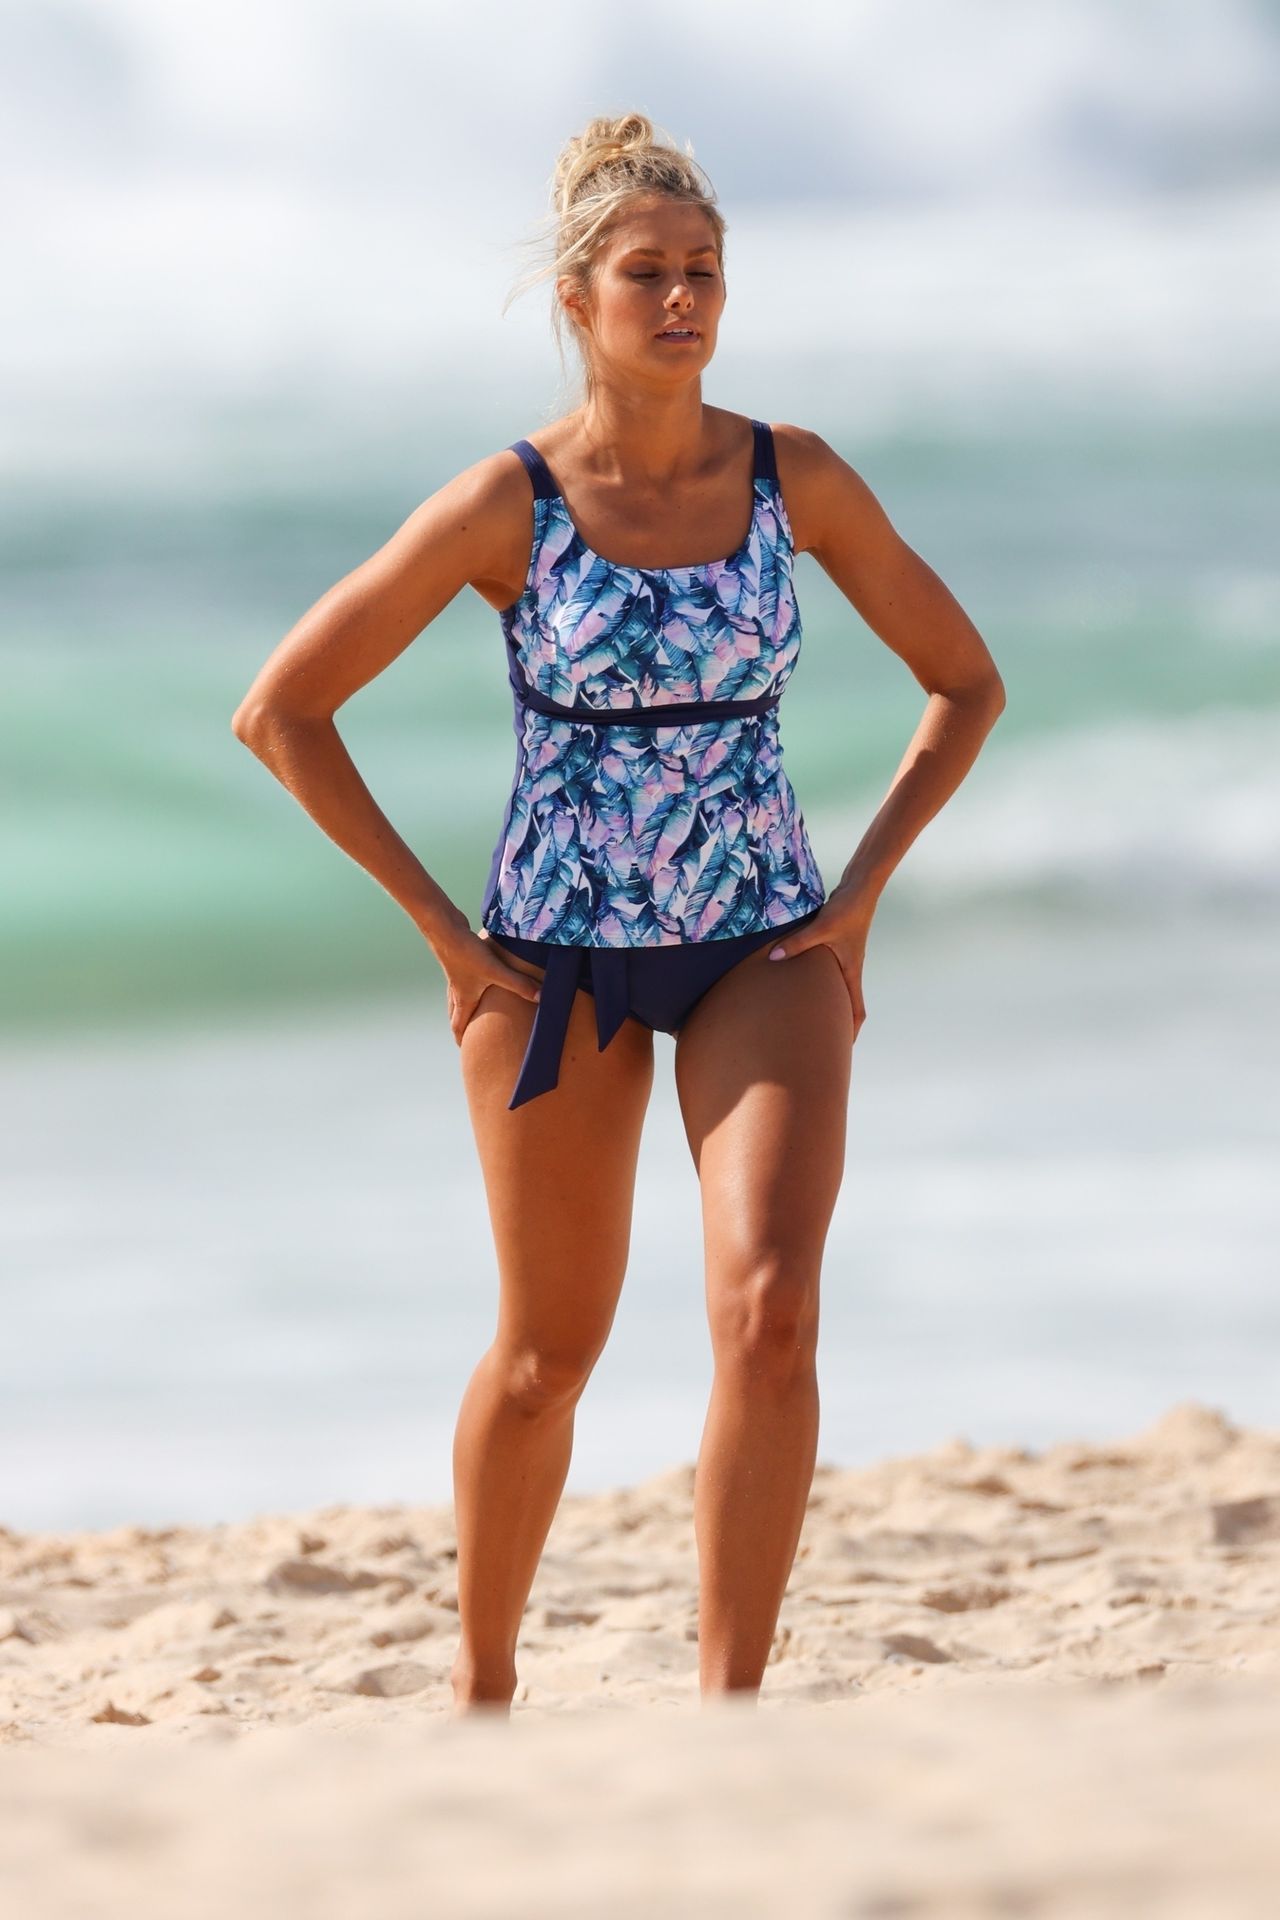 Natalie Roser Flaunts Her Sexy Body in Bikini (43 Photos)